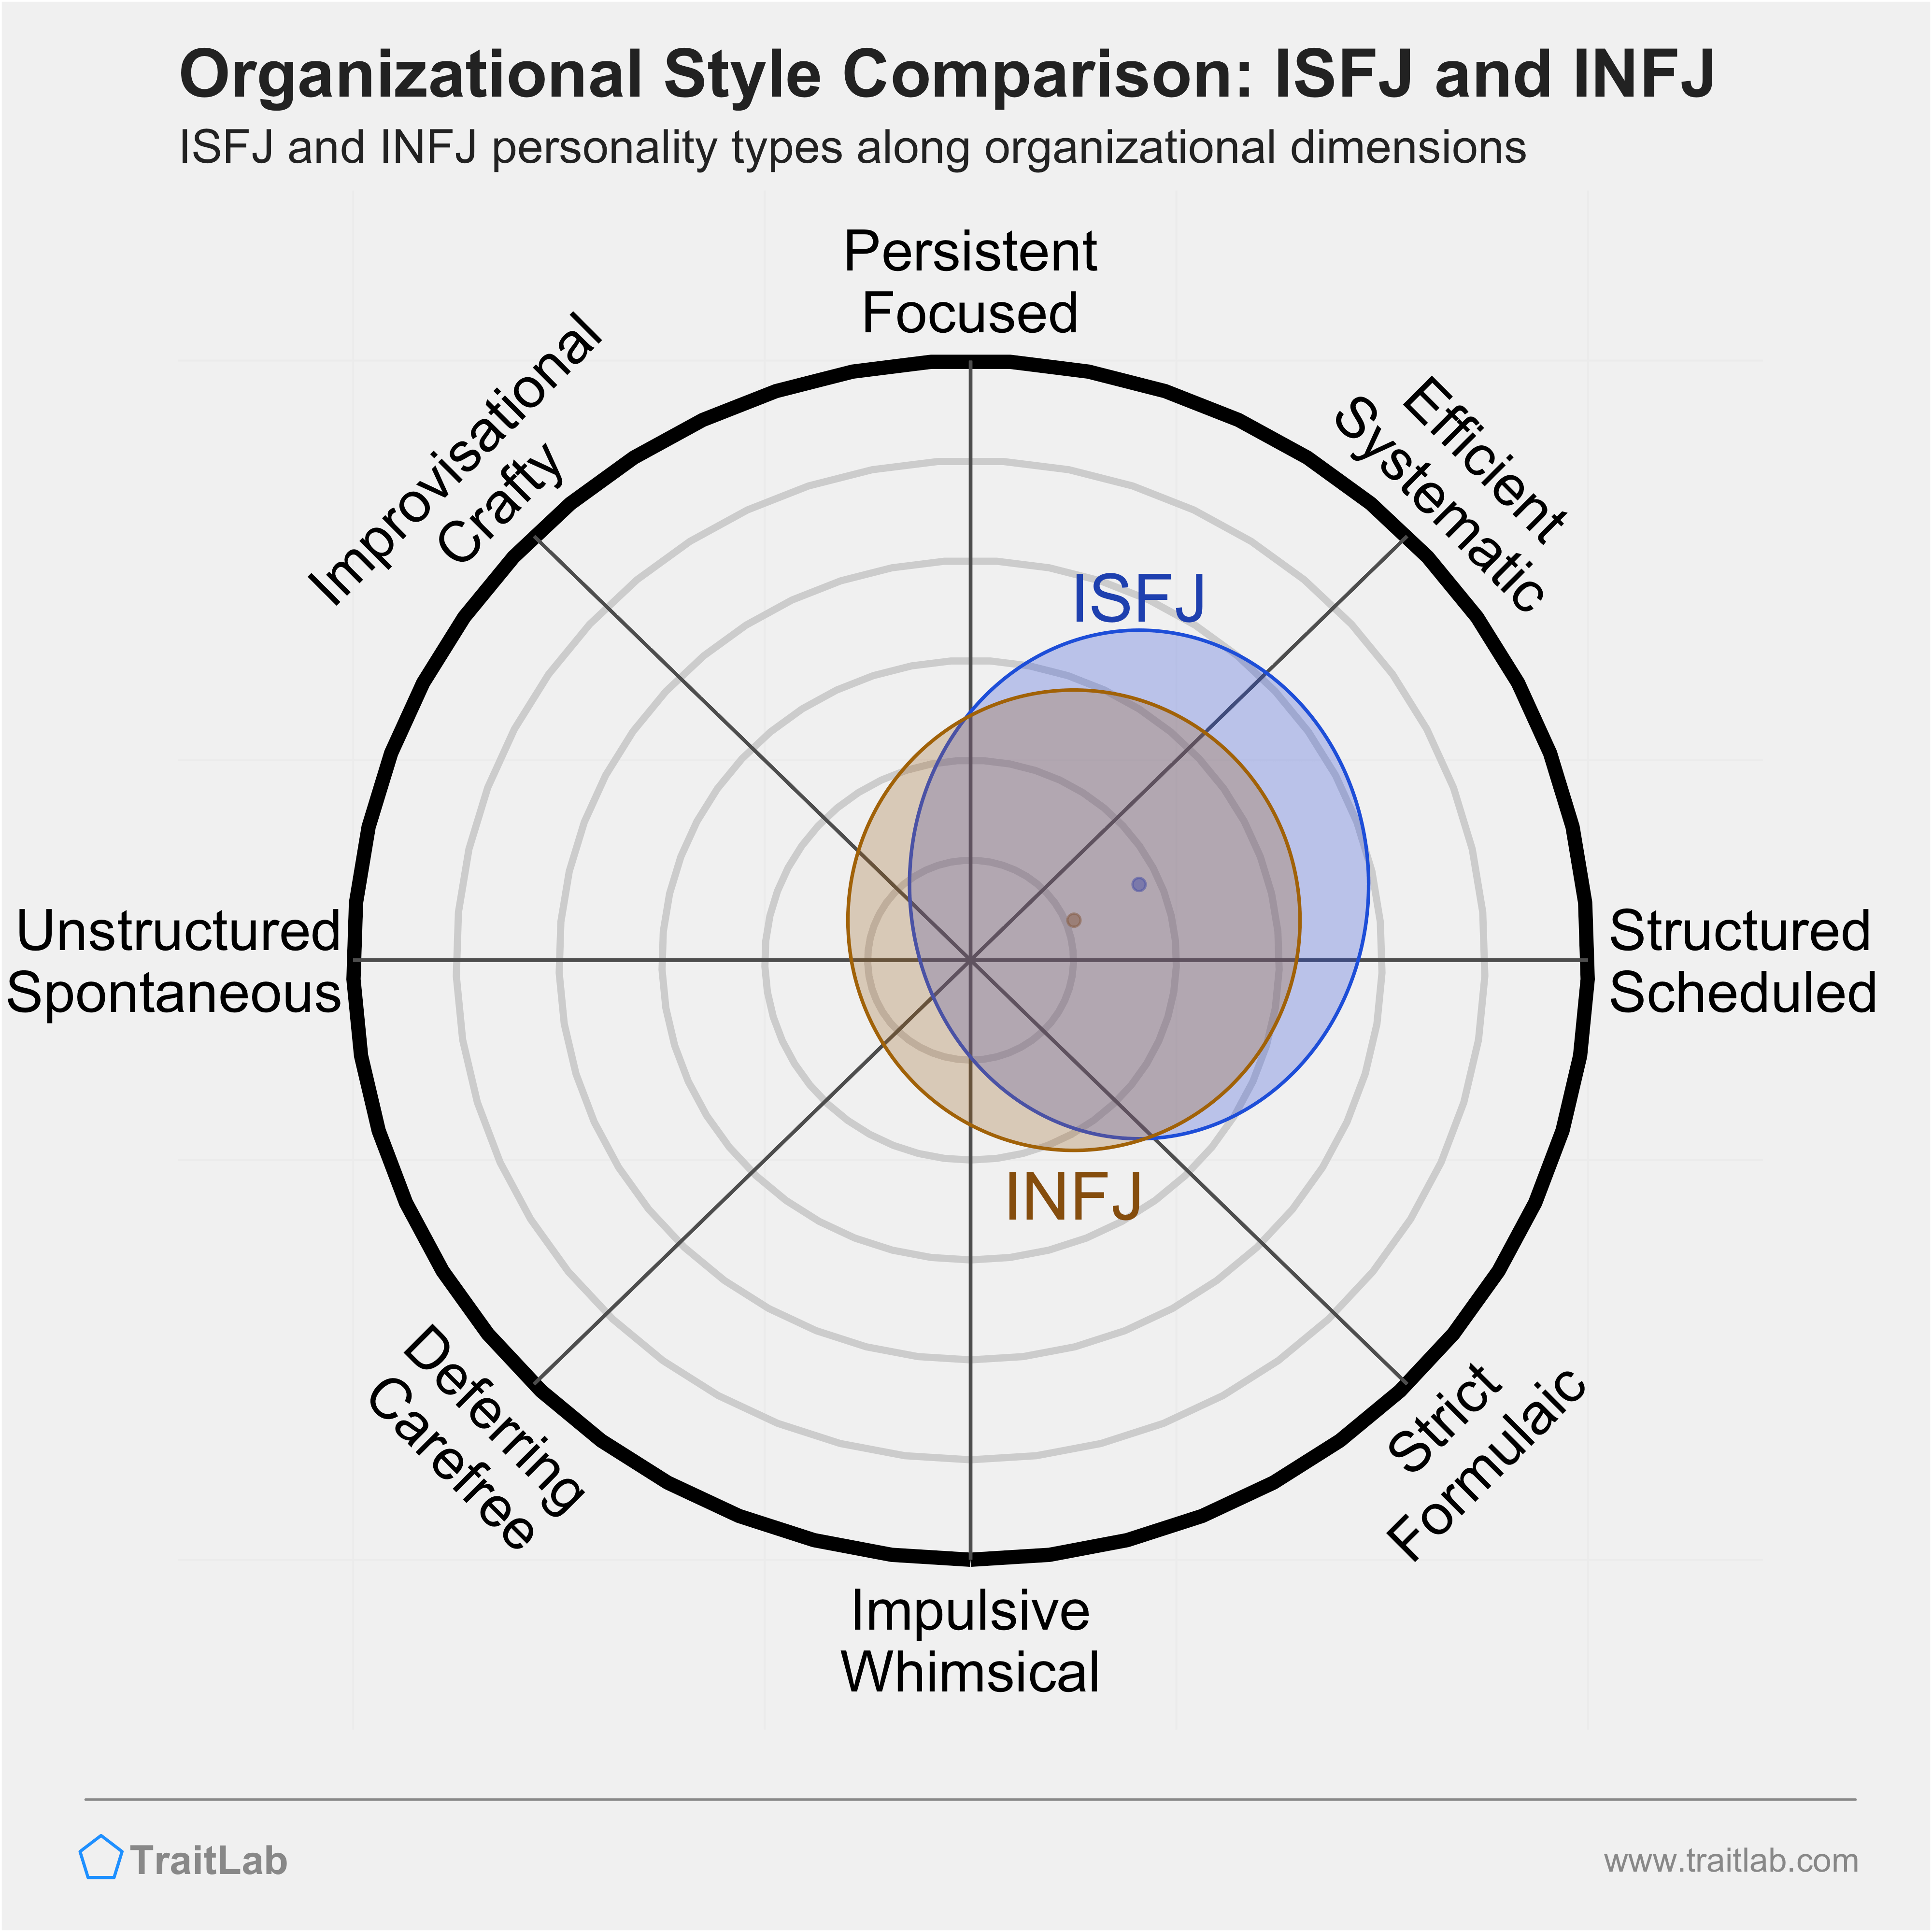 ISFJ and INFJ comparison across organizational dimensions